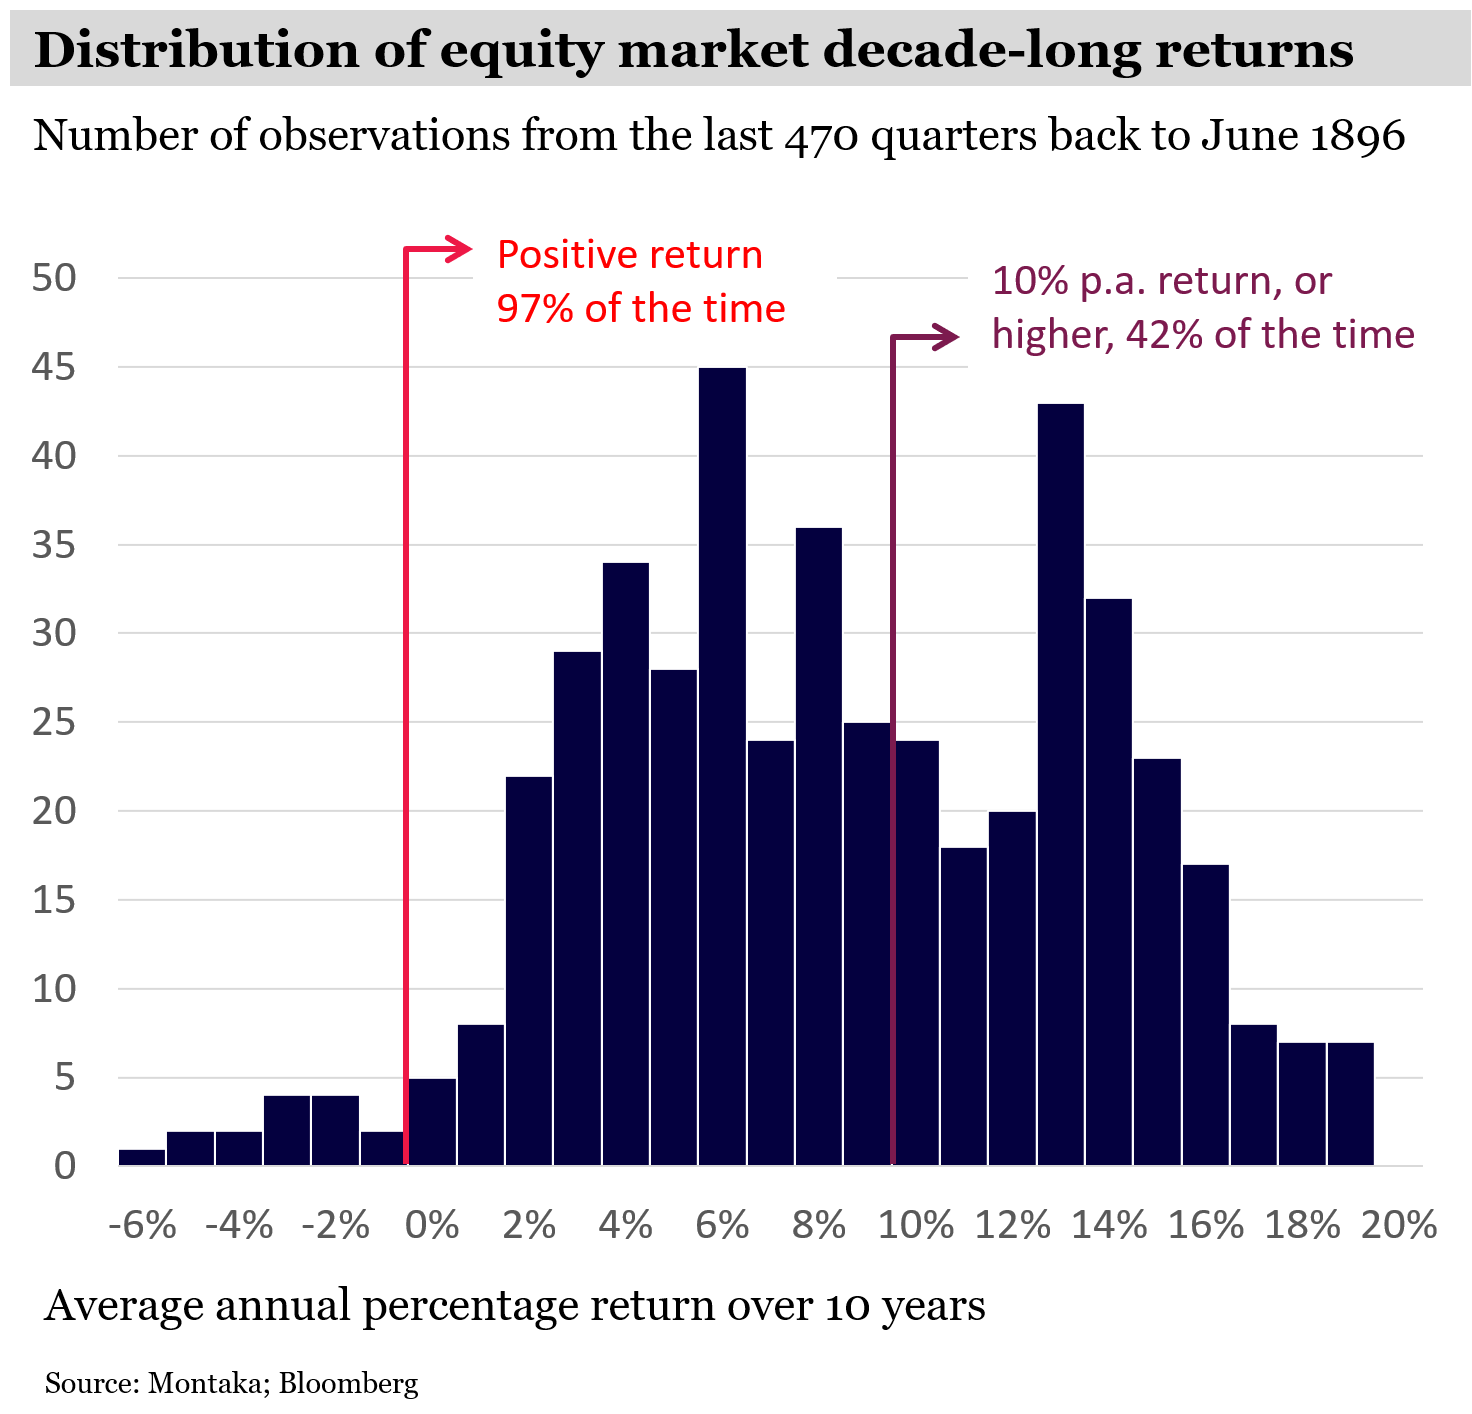 Equity market decade-long returns